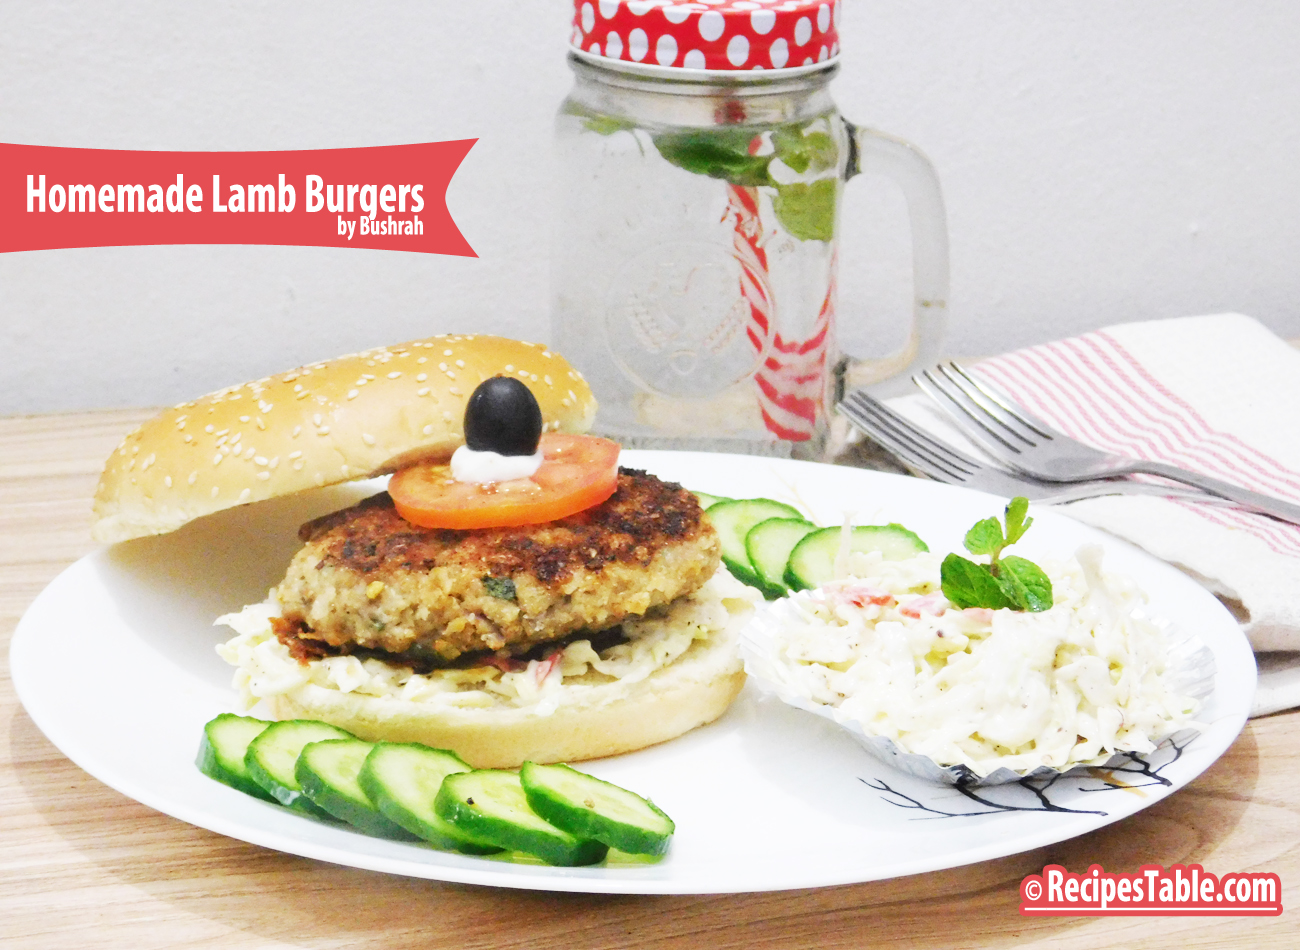 Homemade Lamb Burgers with Coleslaw Recipe